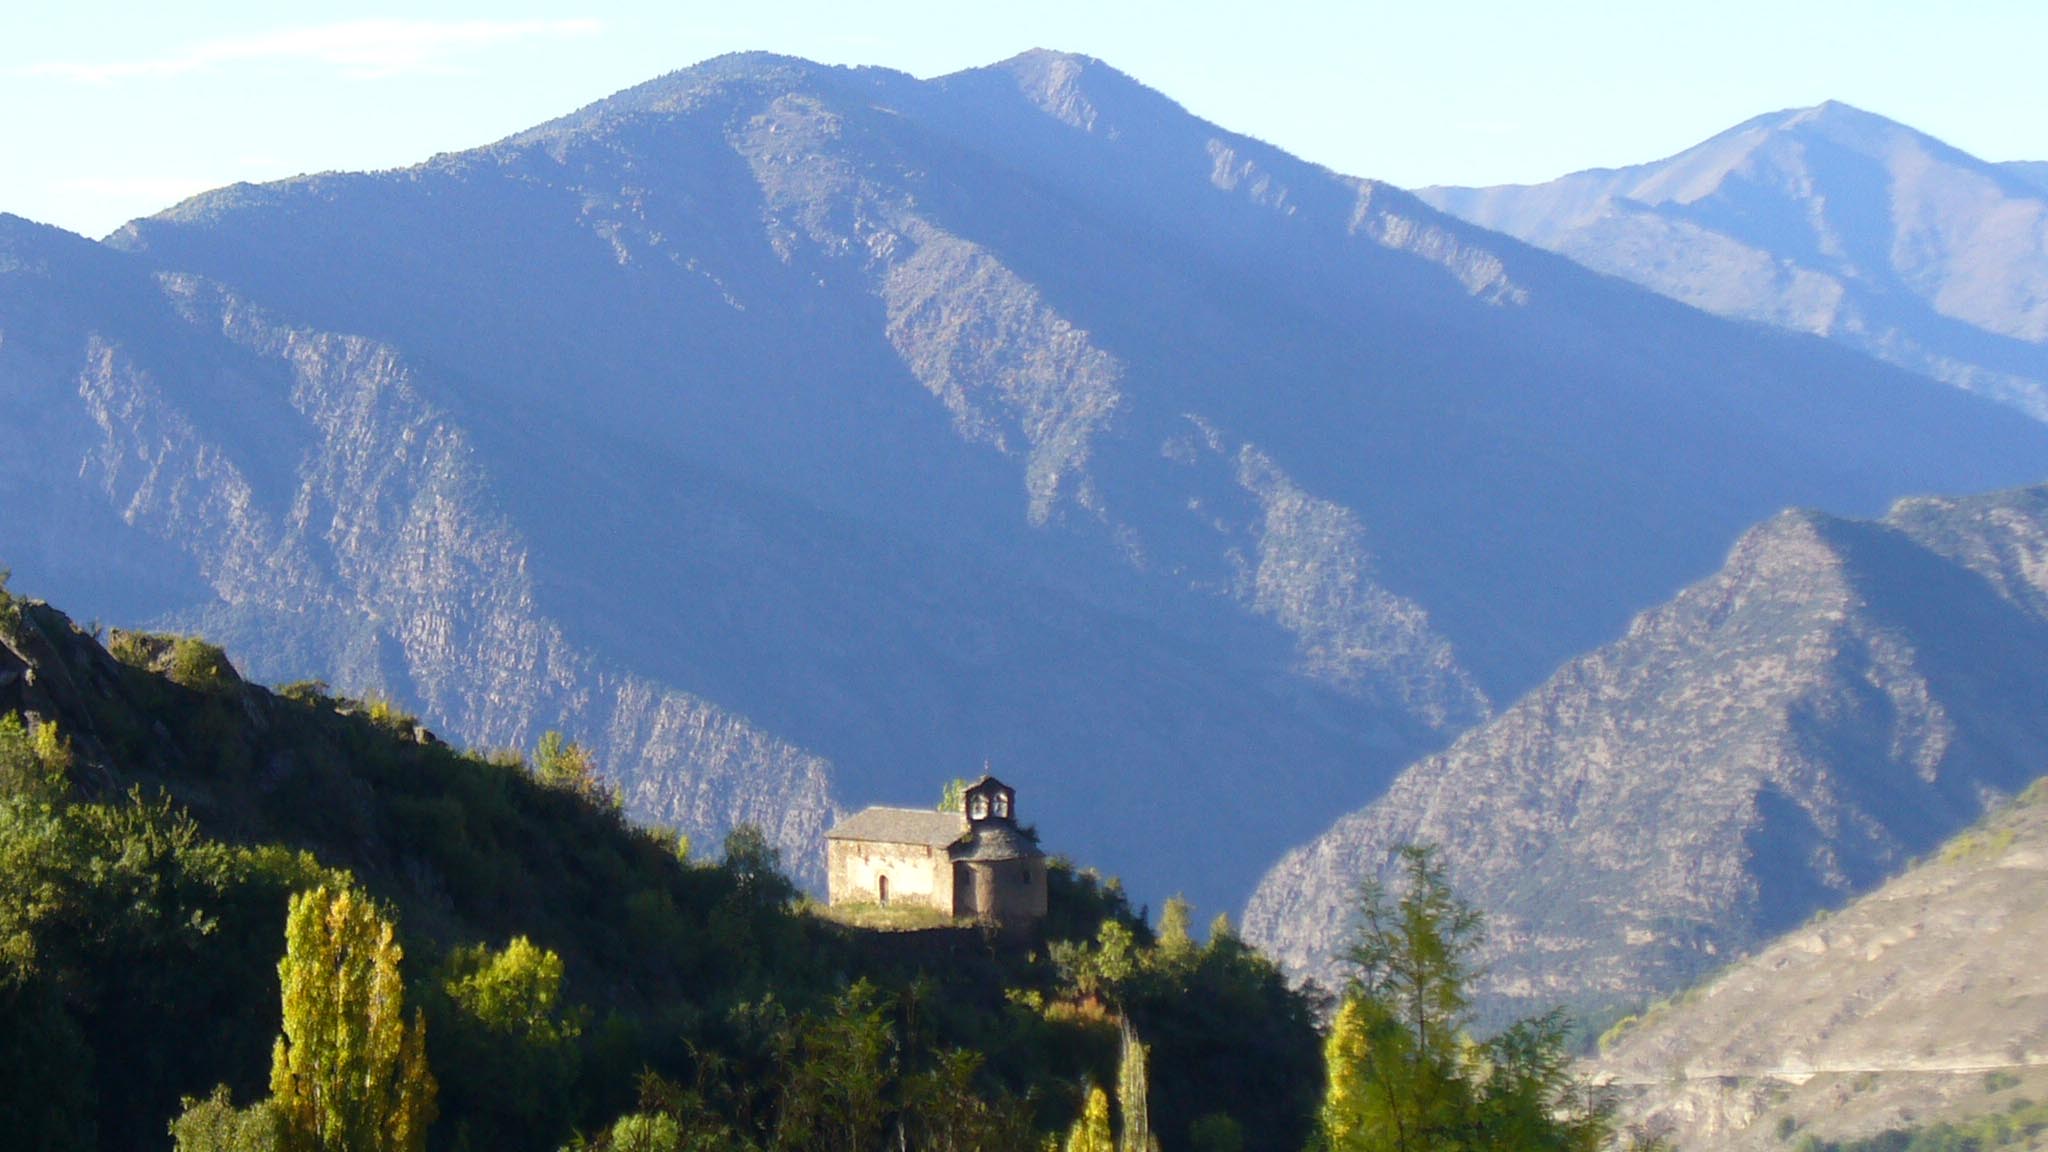 View of the Hermitage of Santa Eulalia d’Alendo from the Centre d’Art i Natura, Farrera, Catalan Pyrenees.